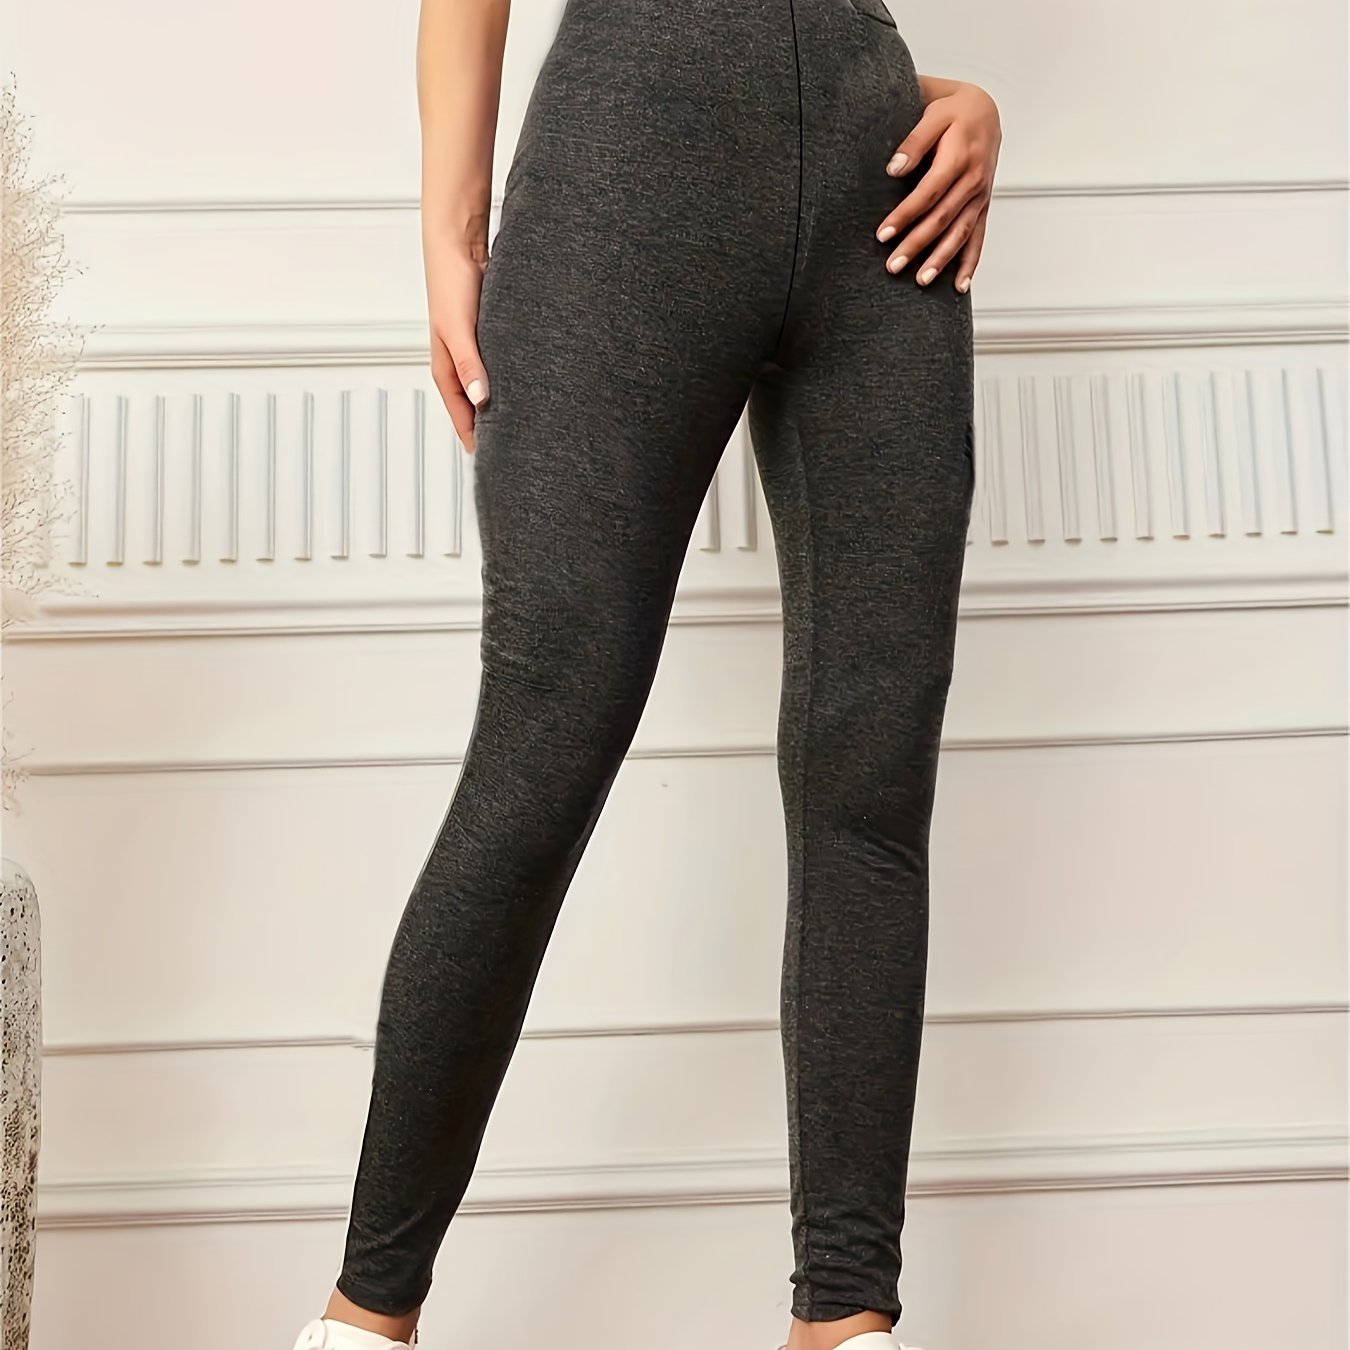 Toocool - Leggings pantalones LIQUID metalizados mujer leggins cintura alta  fuseaux DL-672